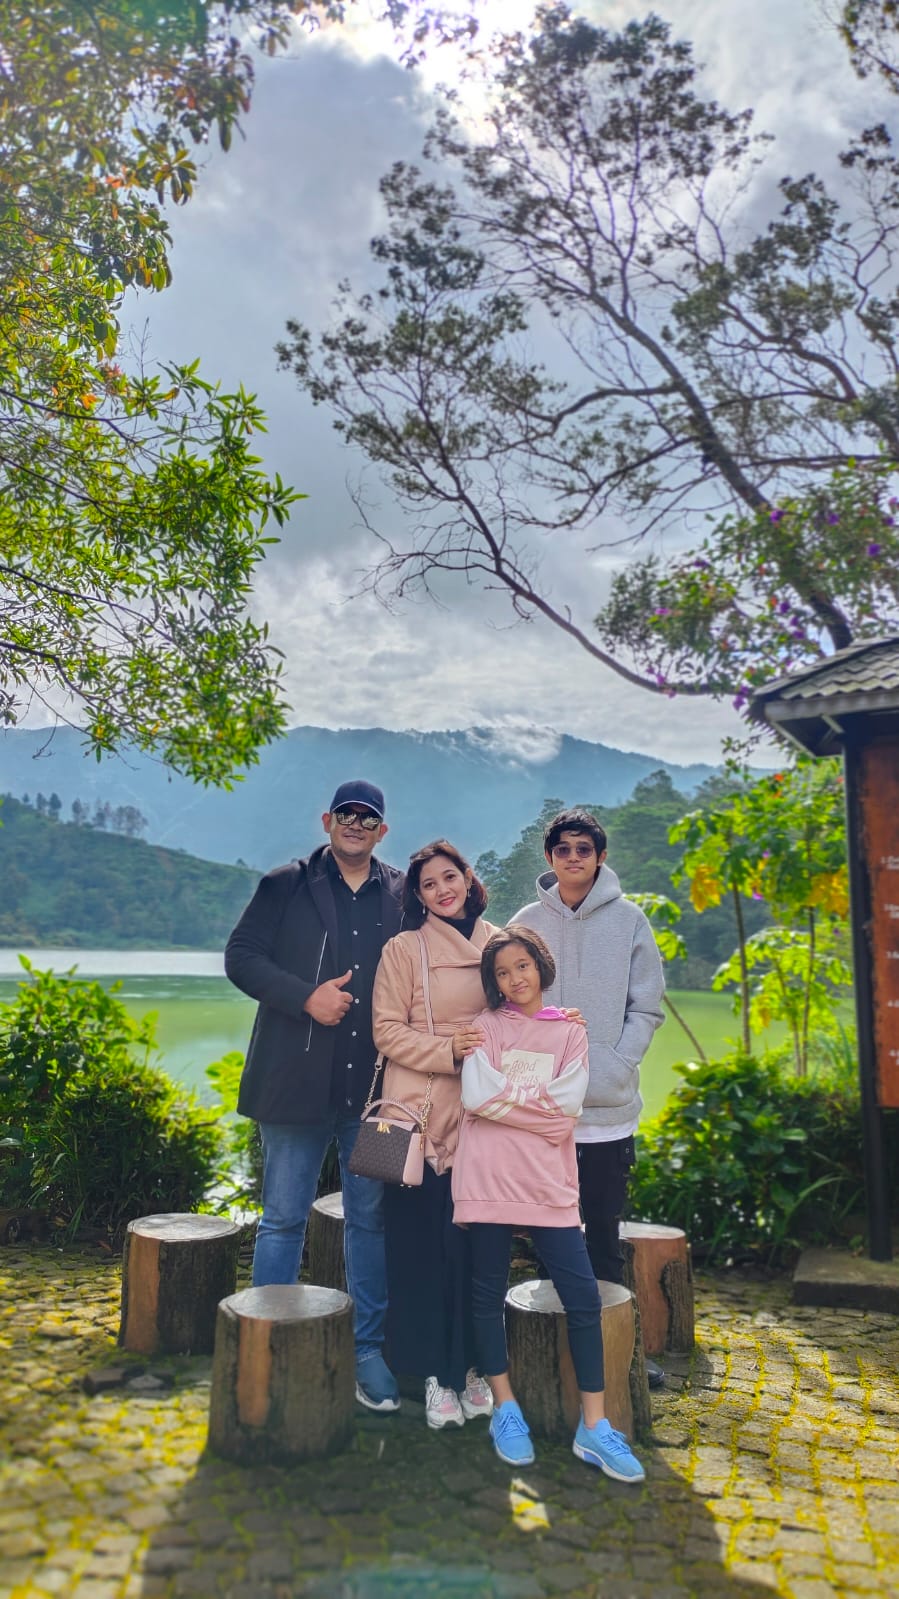 Photo: Mr Yulius Agus Prasetiyanto with his family